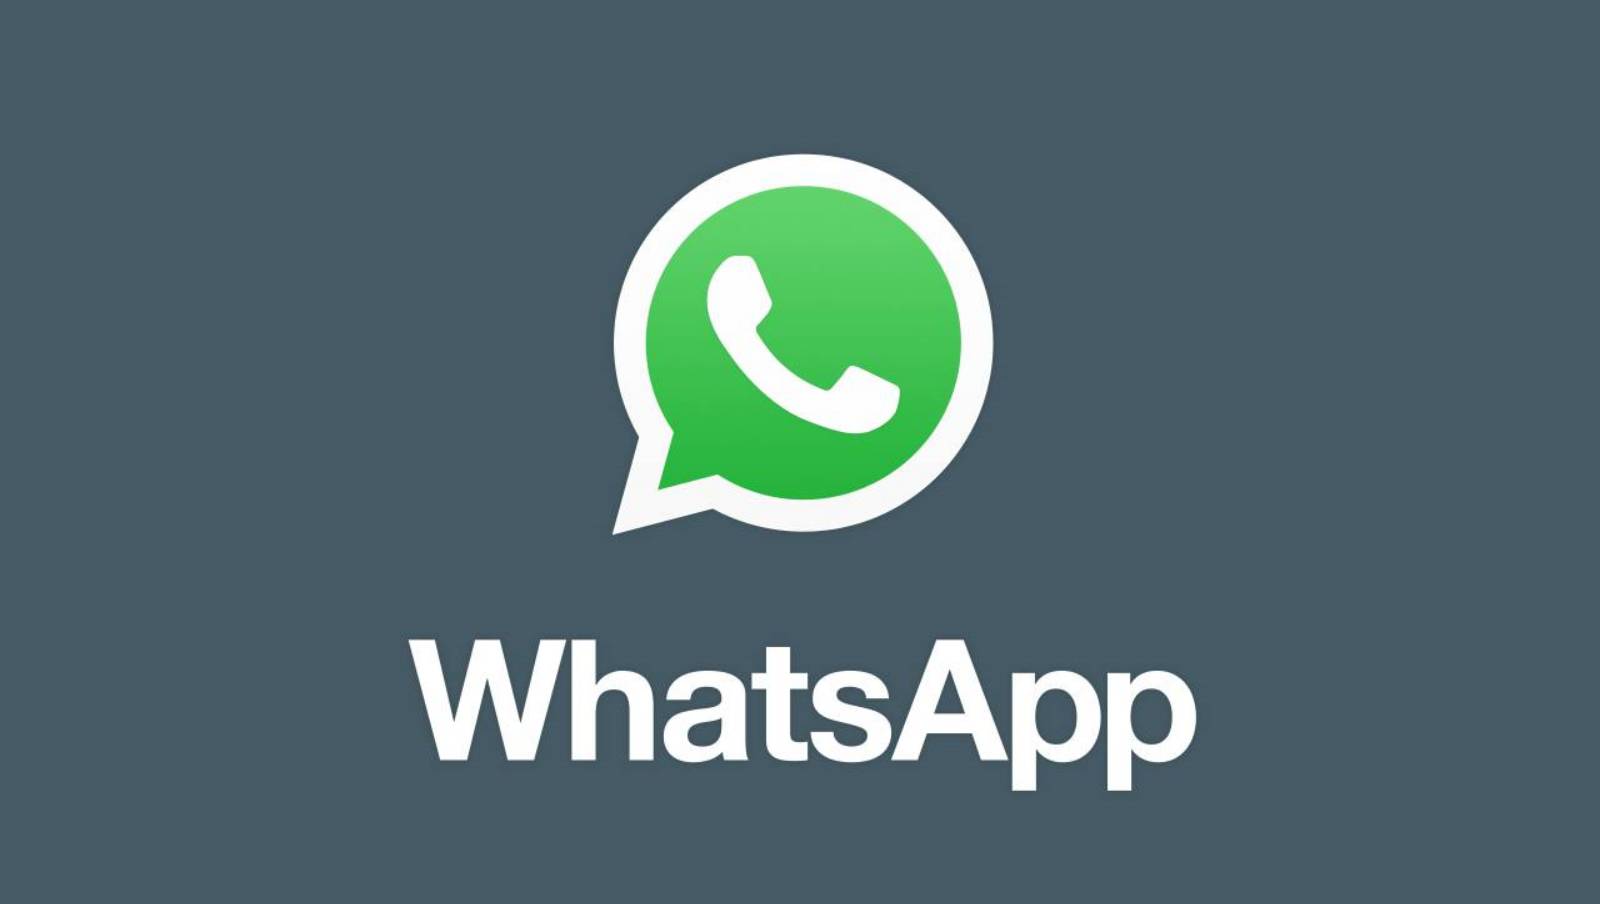 WhatsApp kyselyt